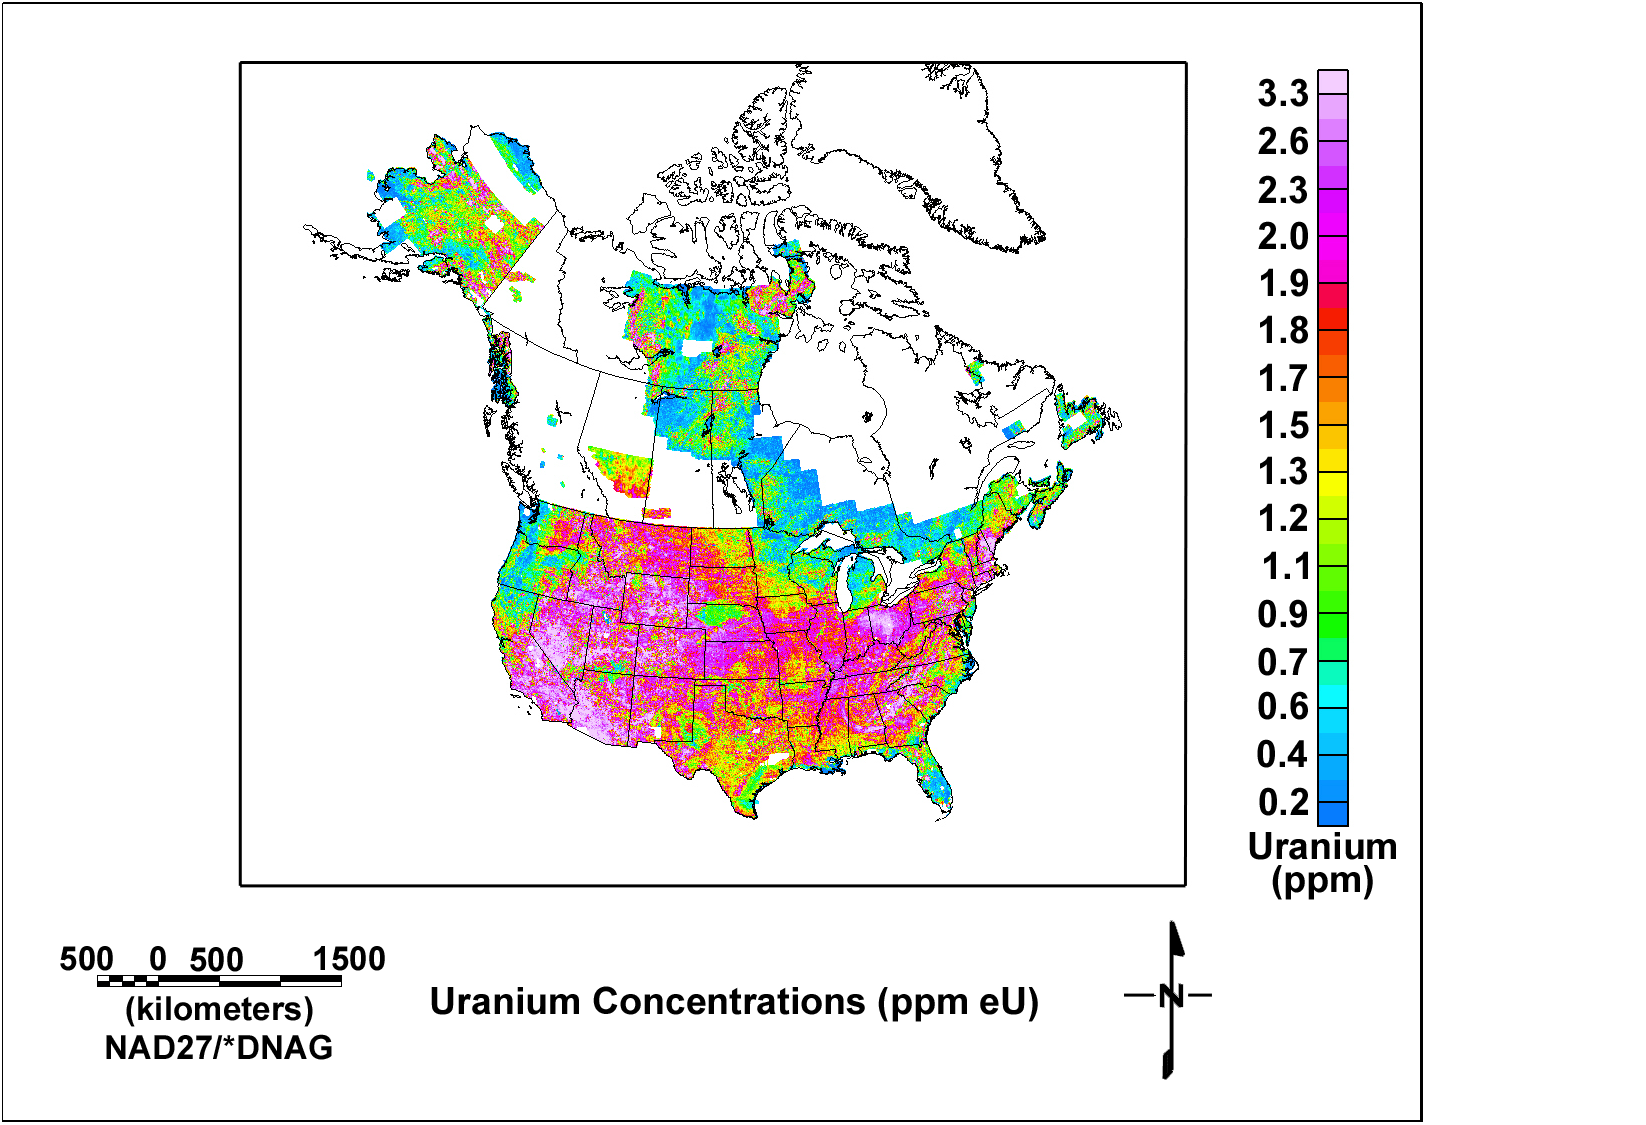 Full-resolution version of the uranium map.